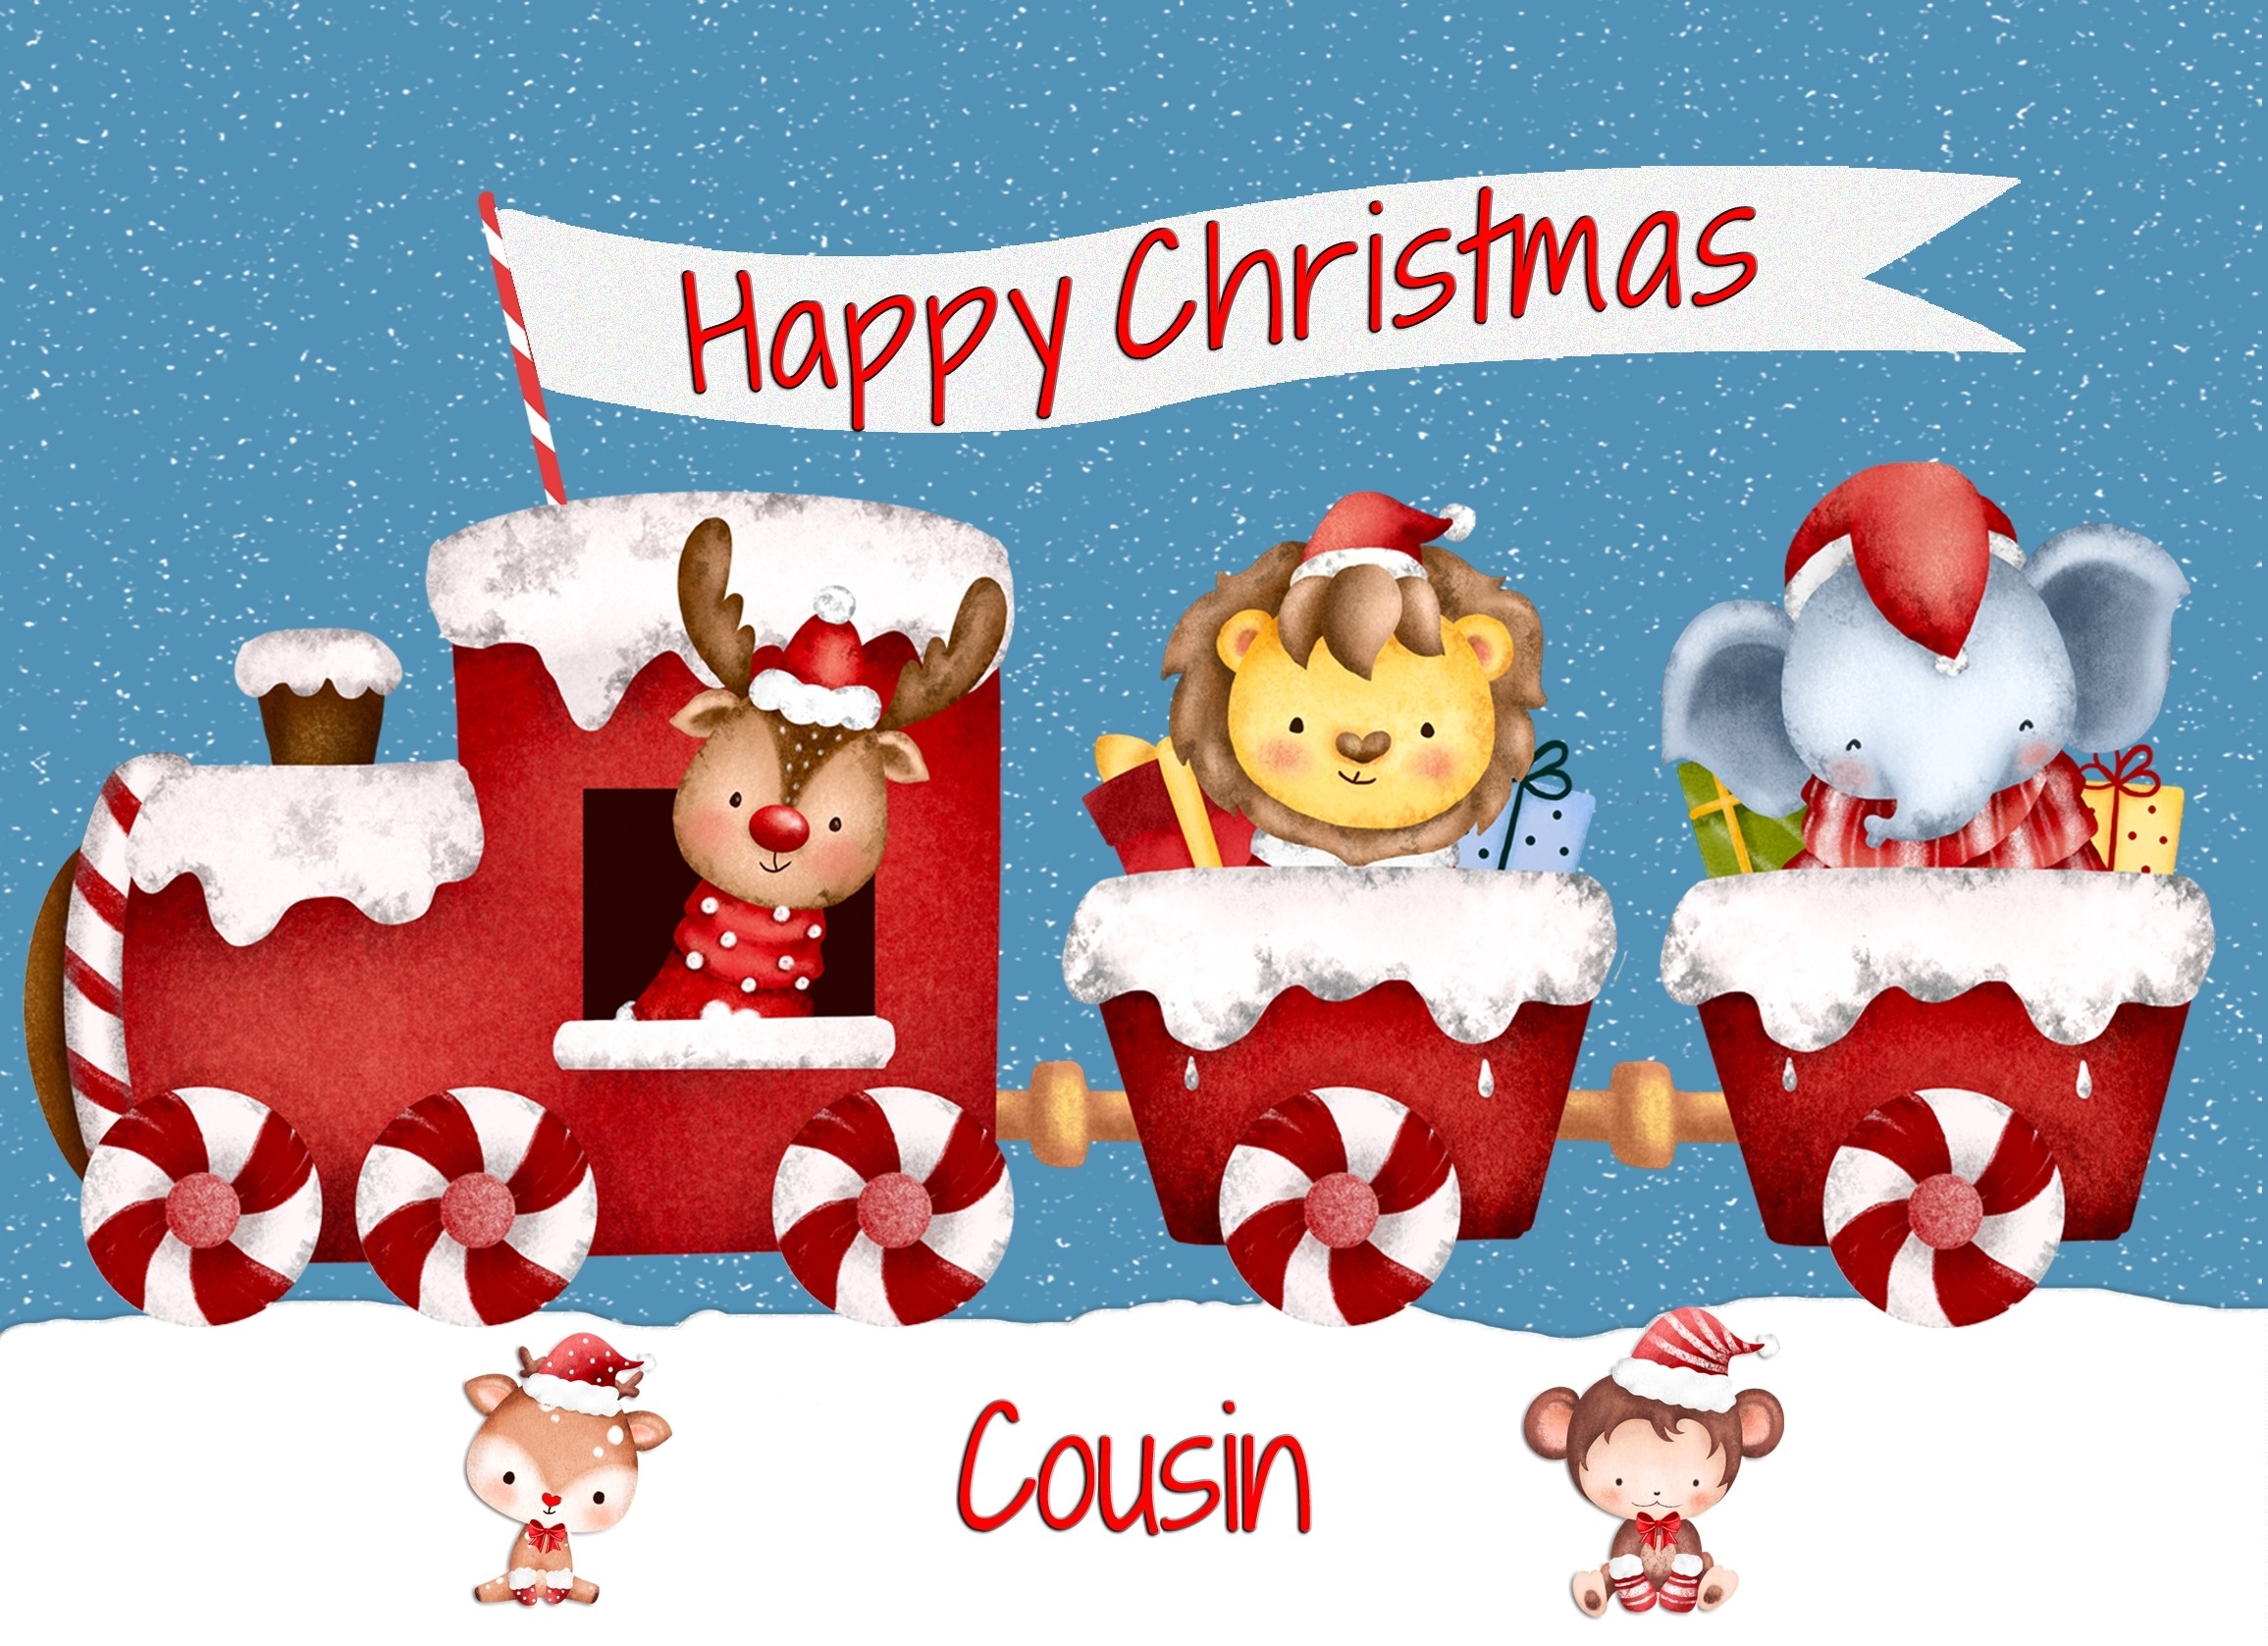 Christmas Card For Cousin (Happy Christmas, Train)